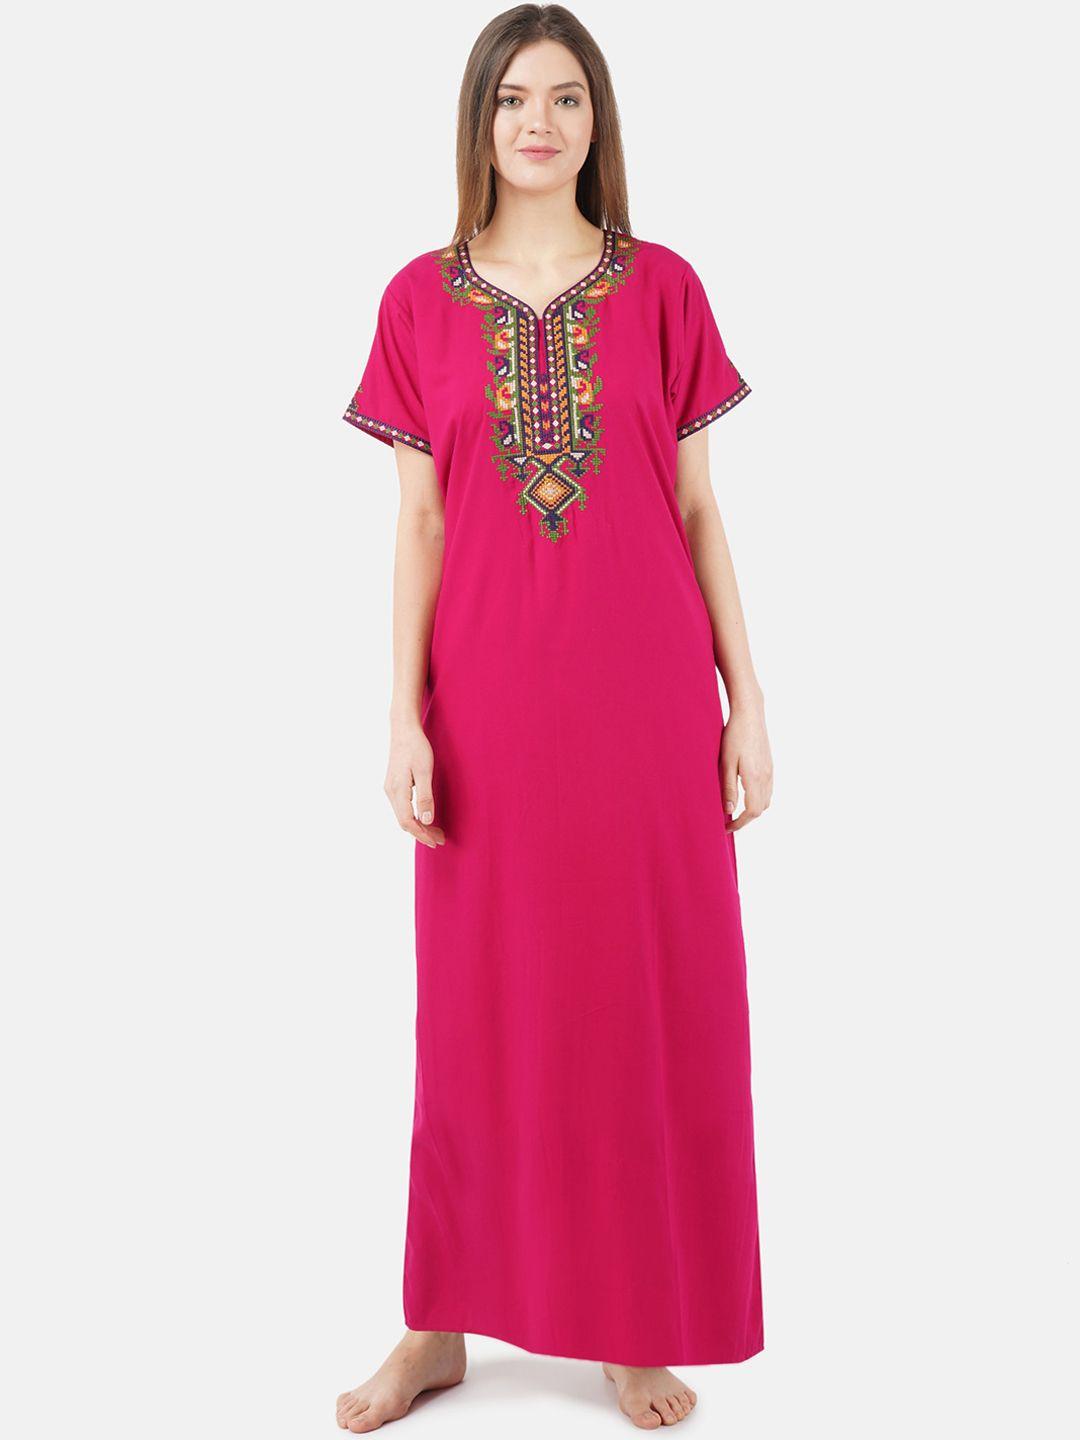 koi sleepwear pink embroidered nightdress